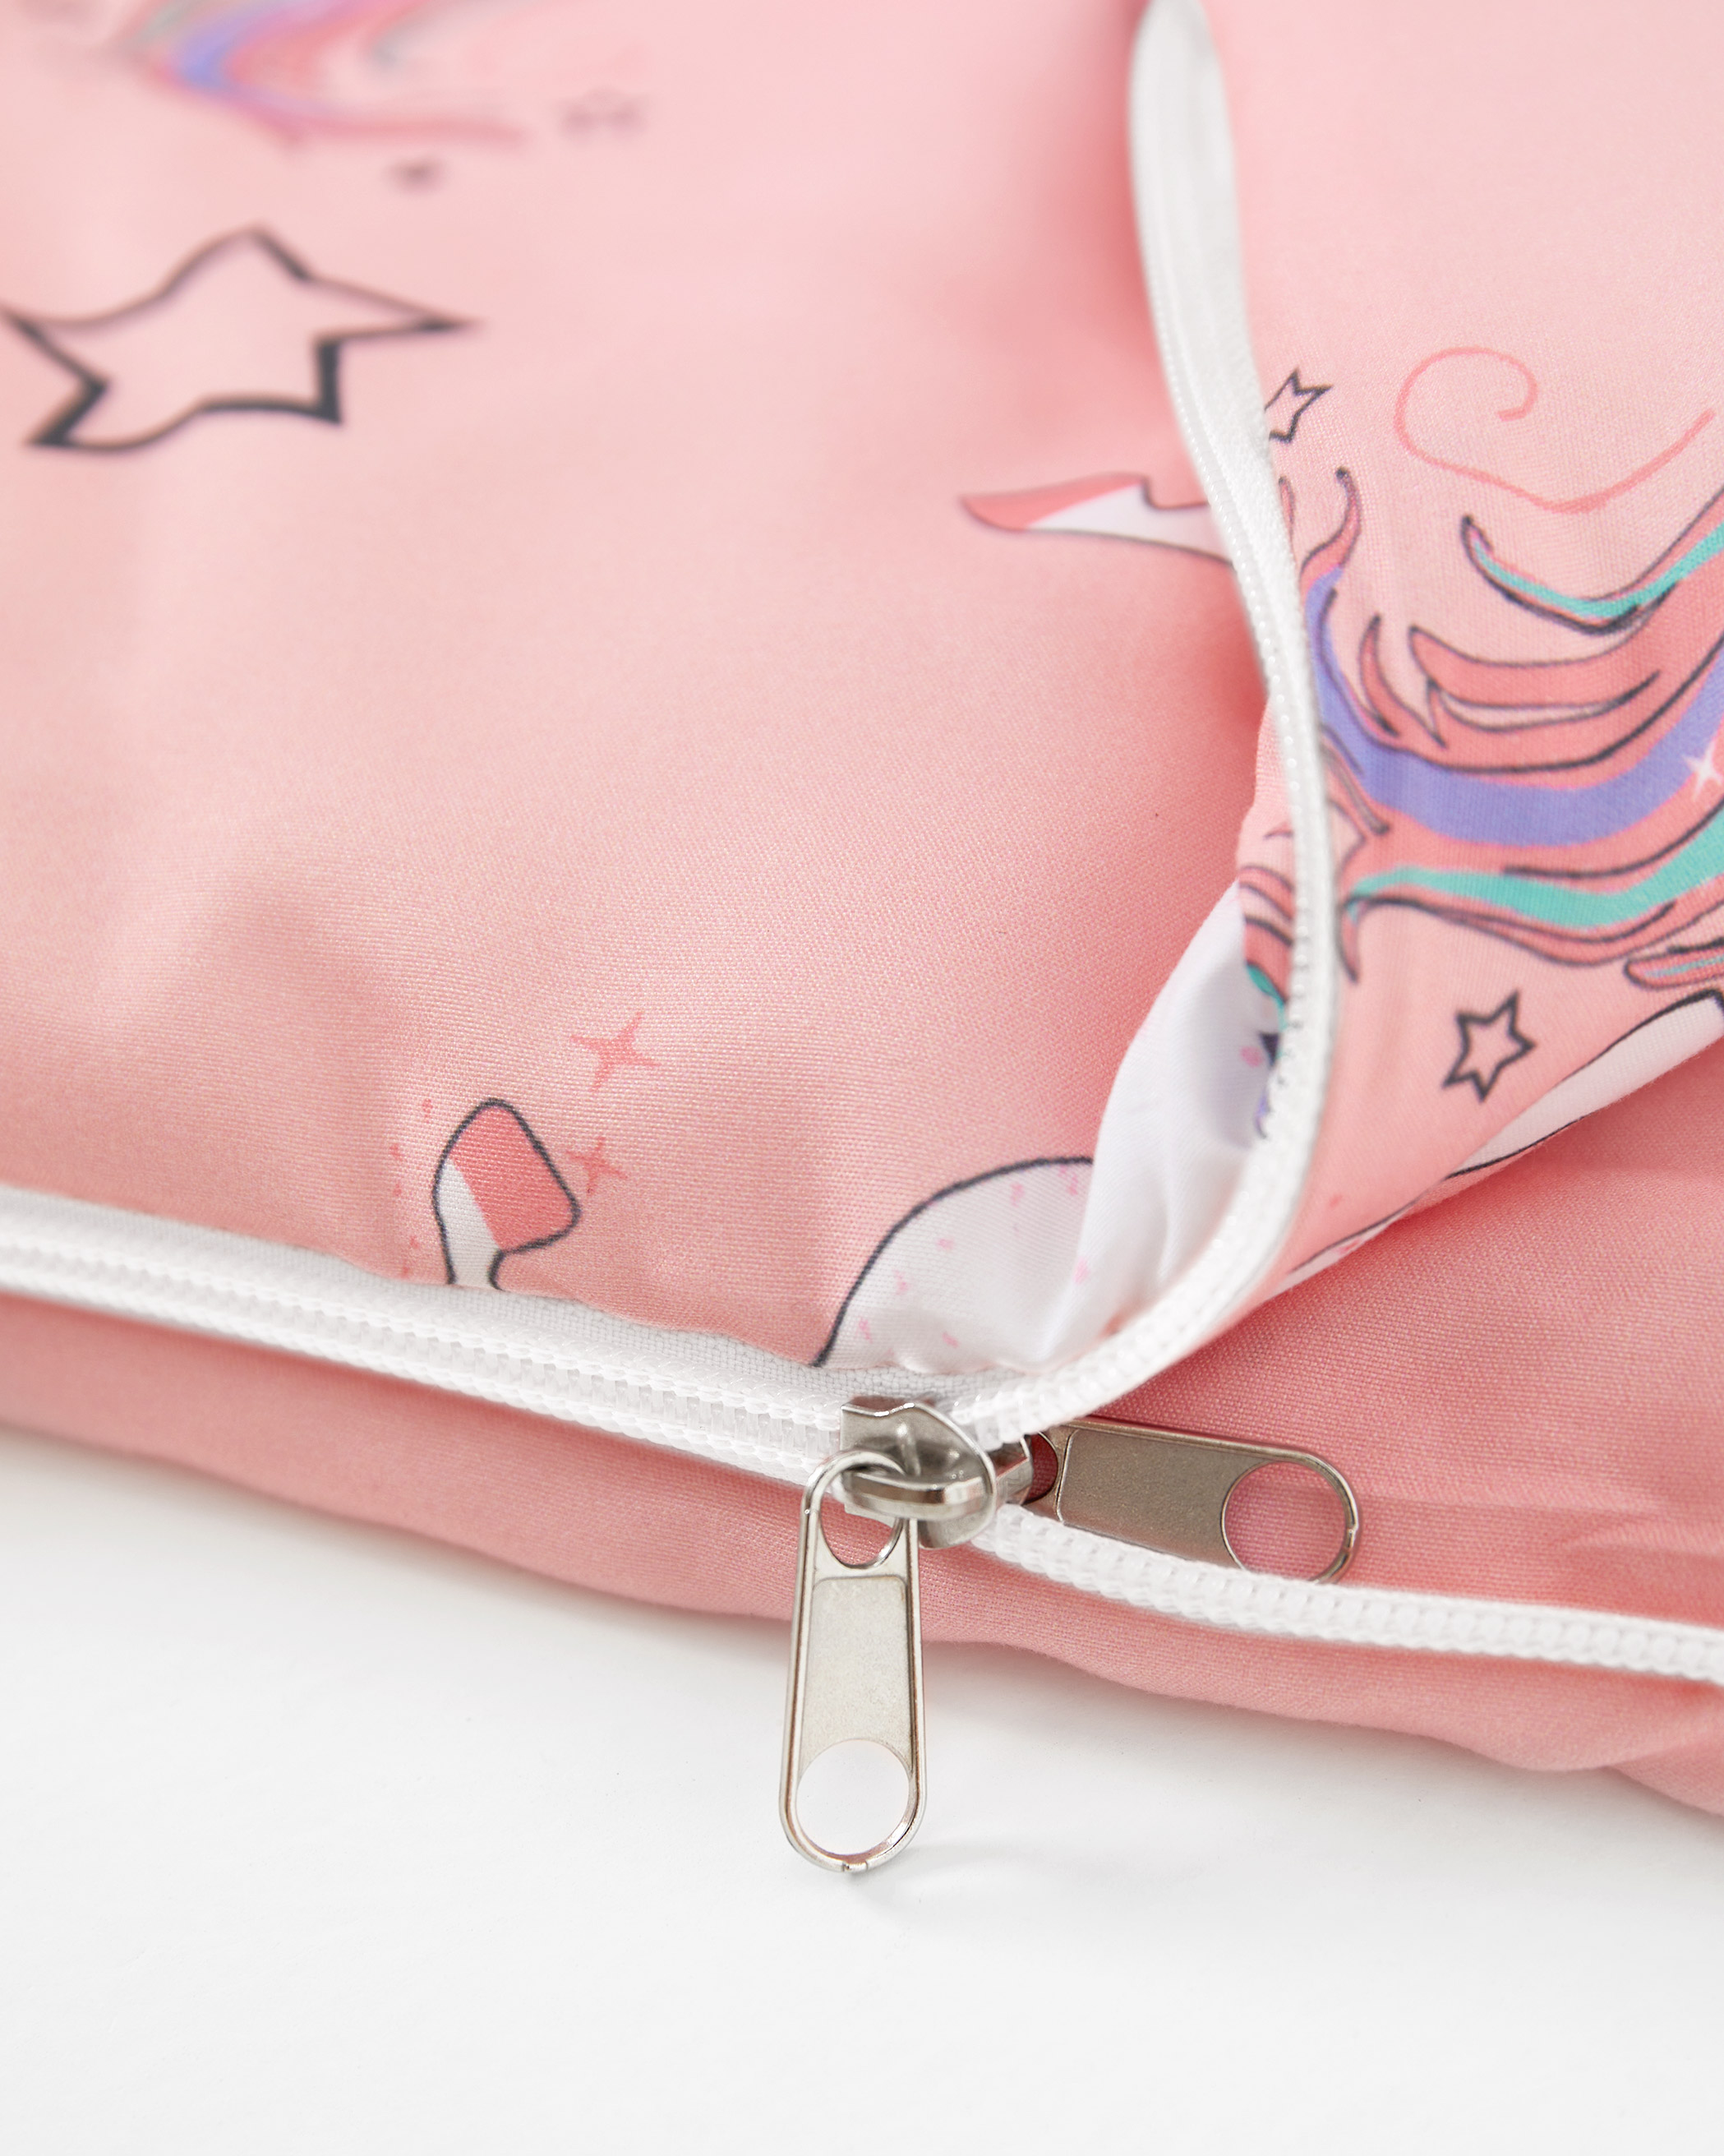 Pink Unicorn Microfiber Kids Sleeping Bag